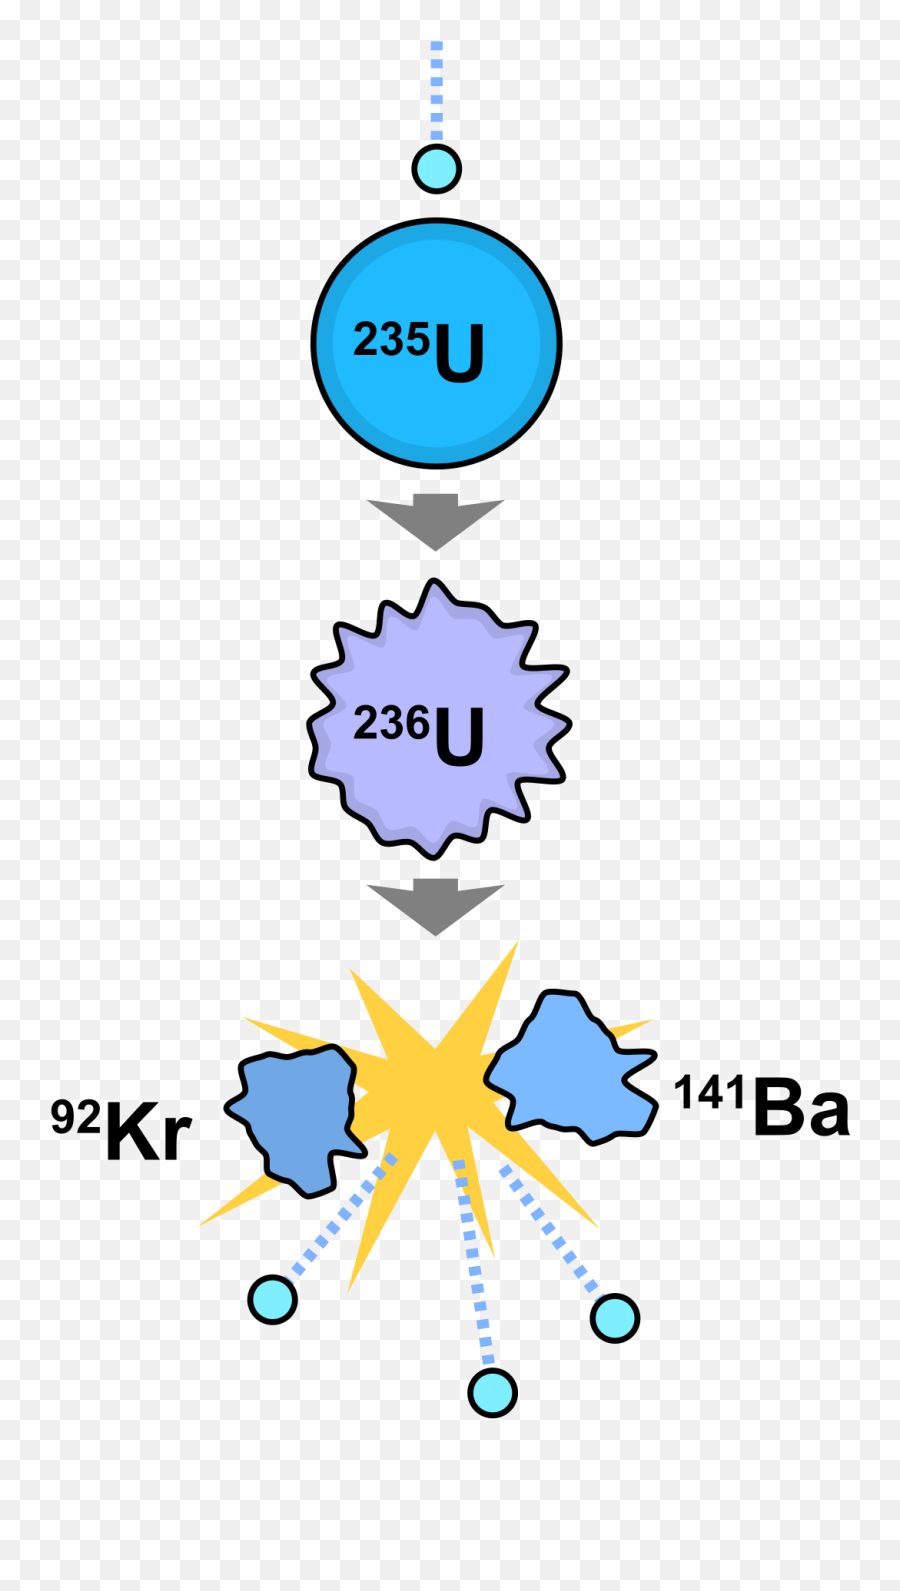 Nuclear Fission - Wikipedia Emoji,Mushroom Cloud Transparent Background